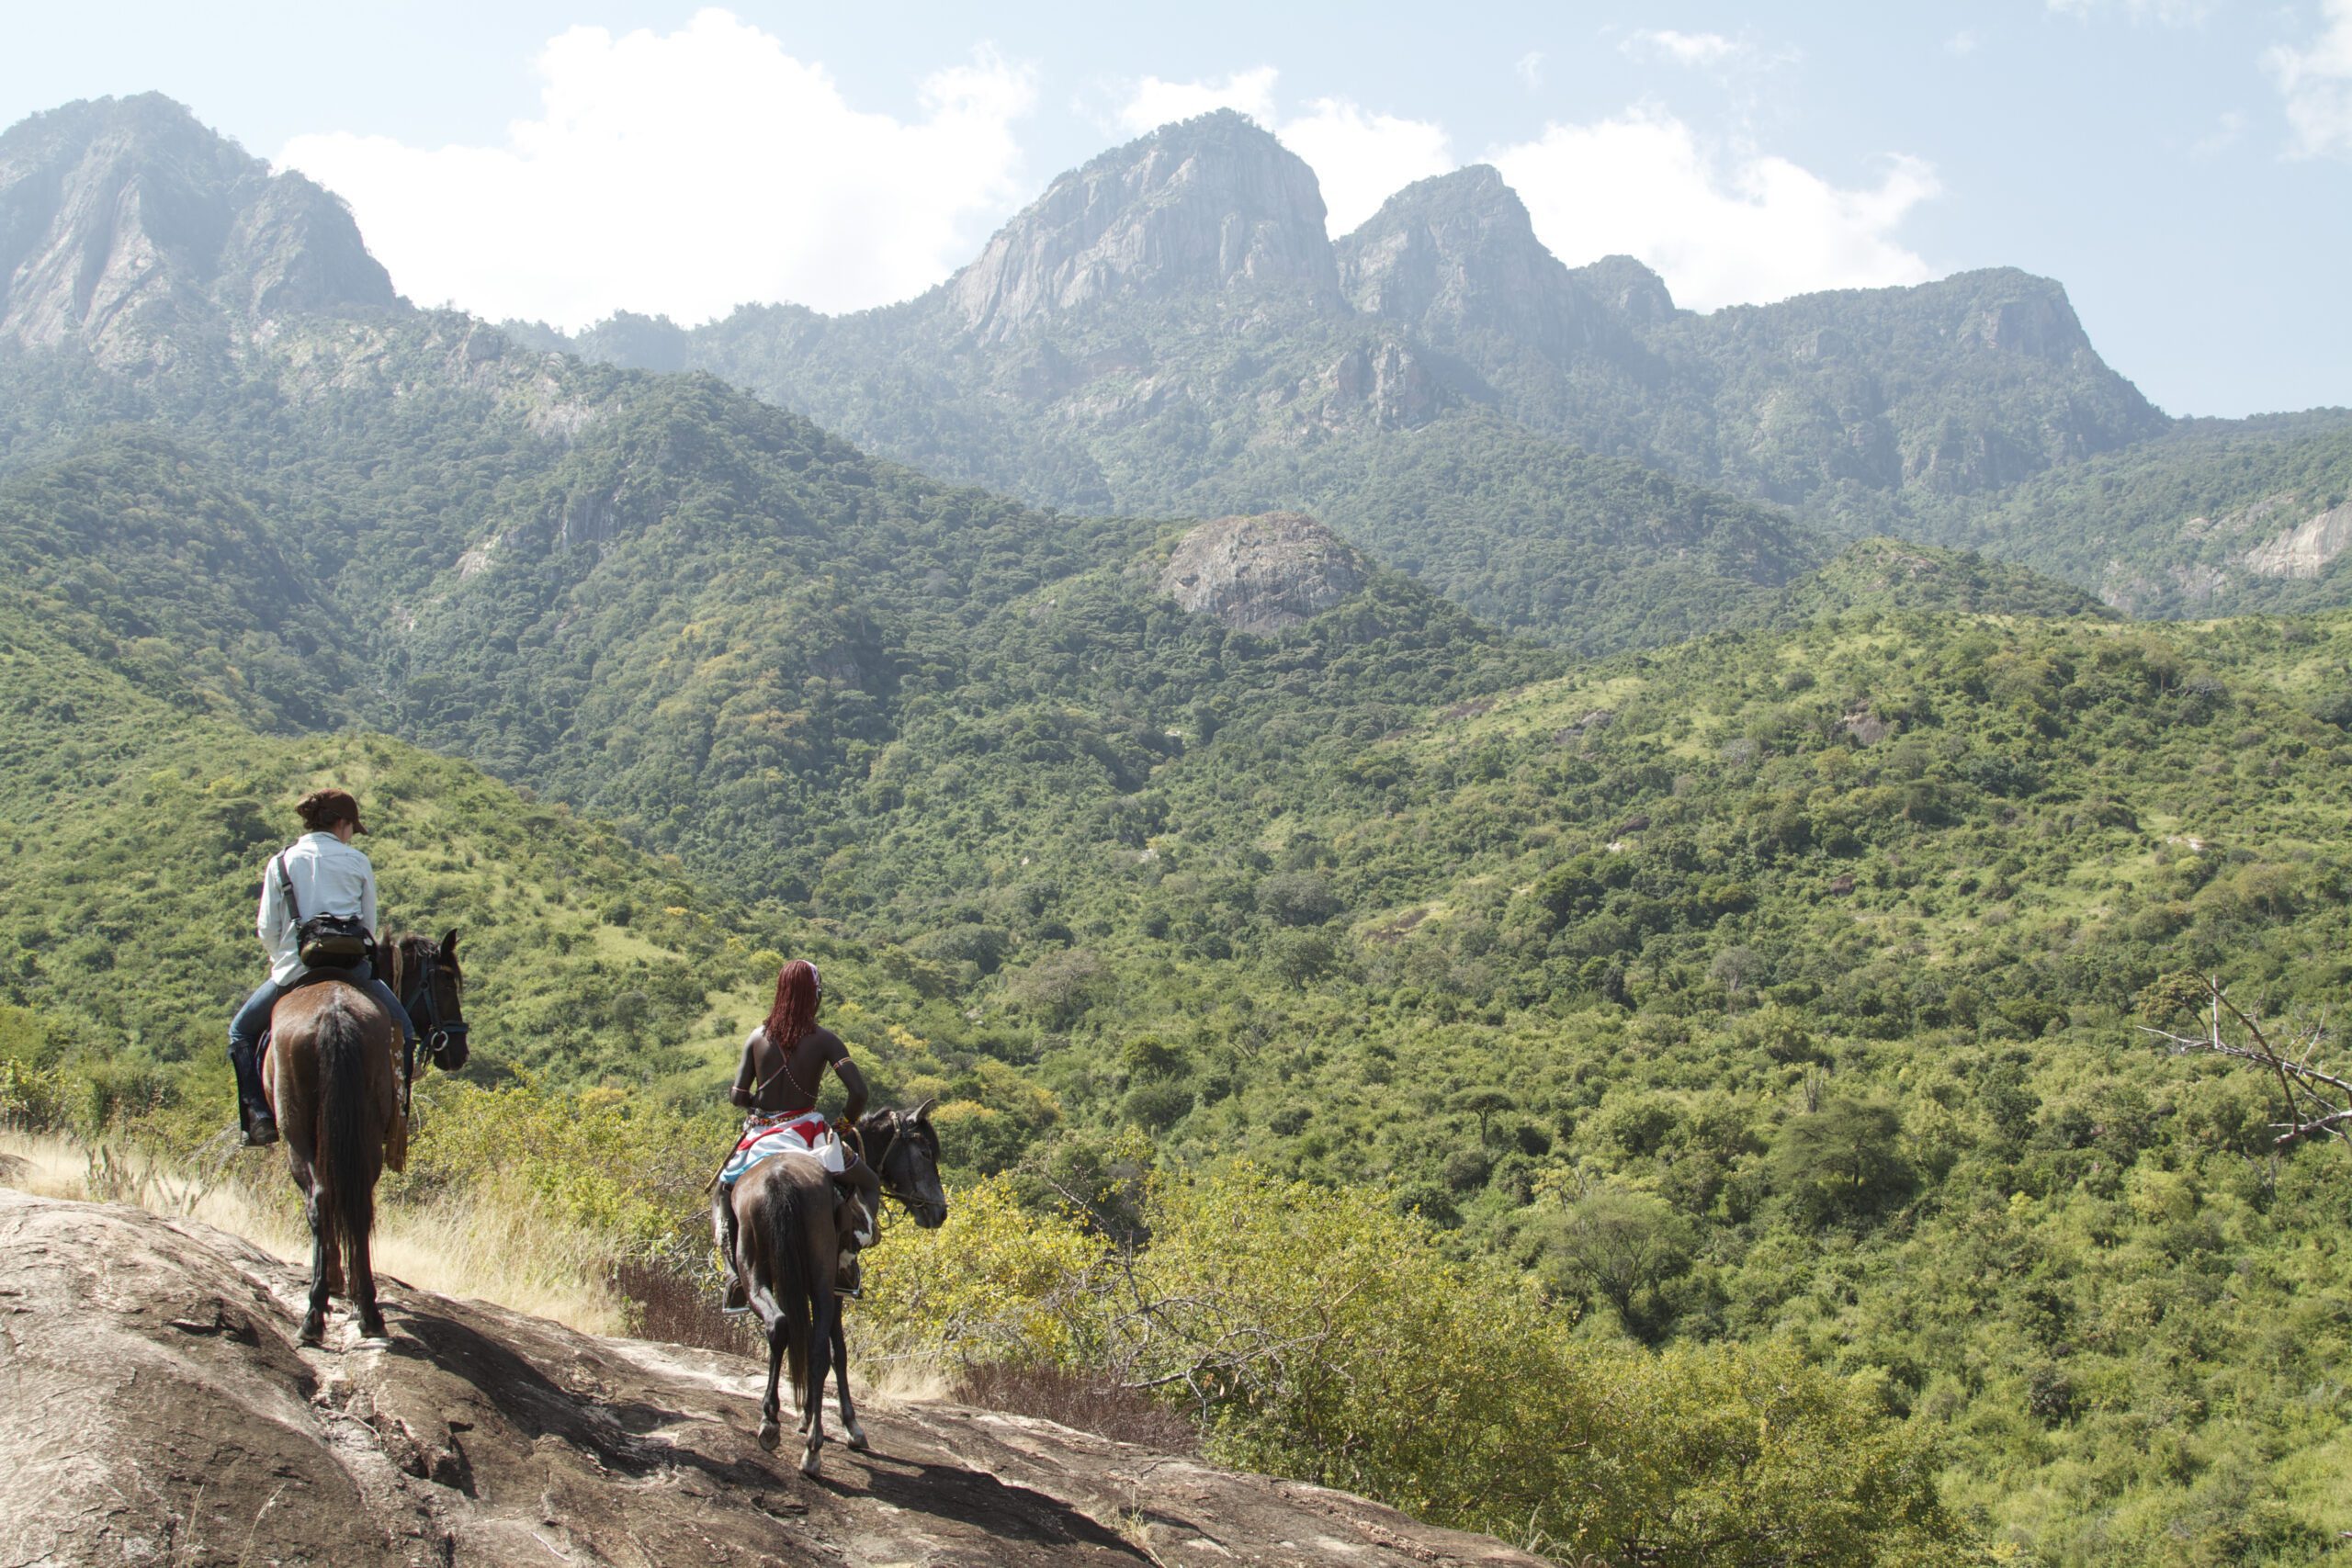 two people on bush ponies admiring the Mathews Range in northern Kenya